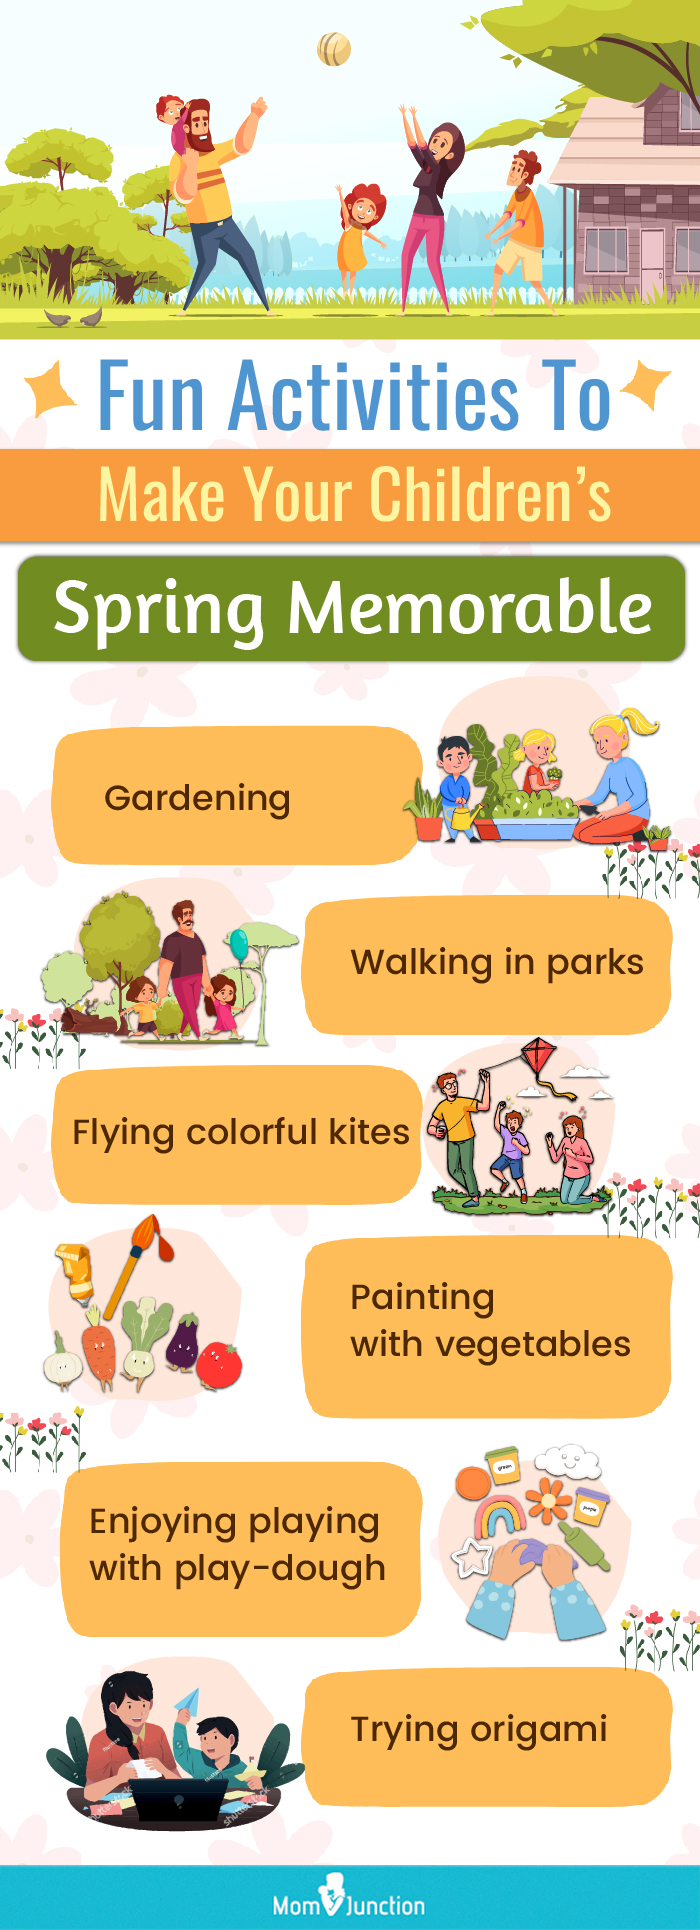 fun activities to make your children spring memorable (infographic)